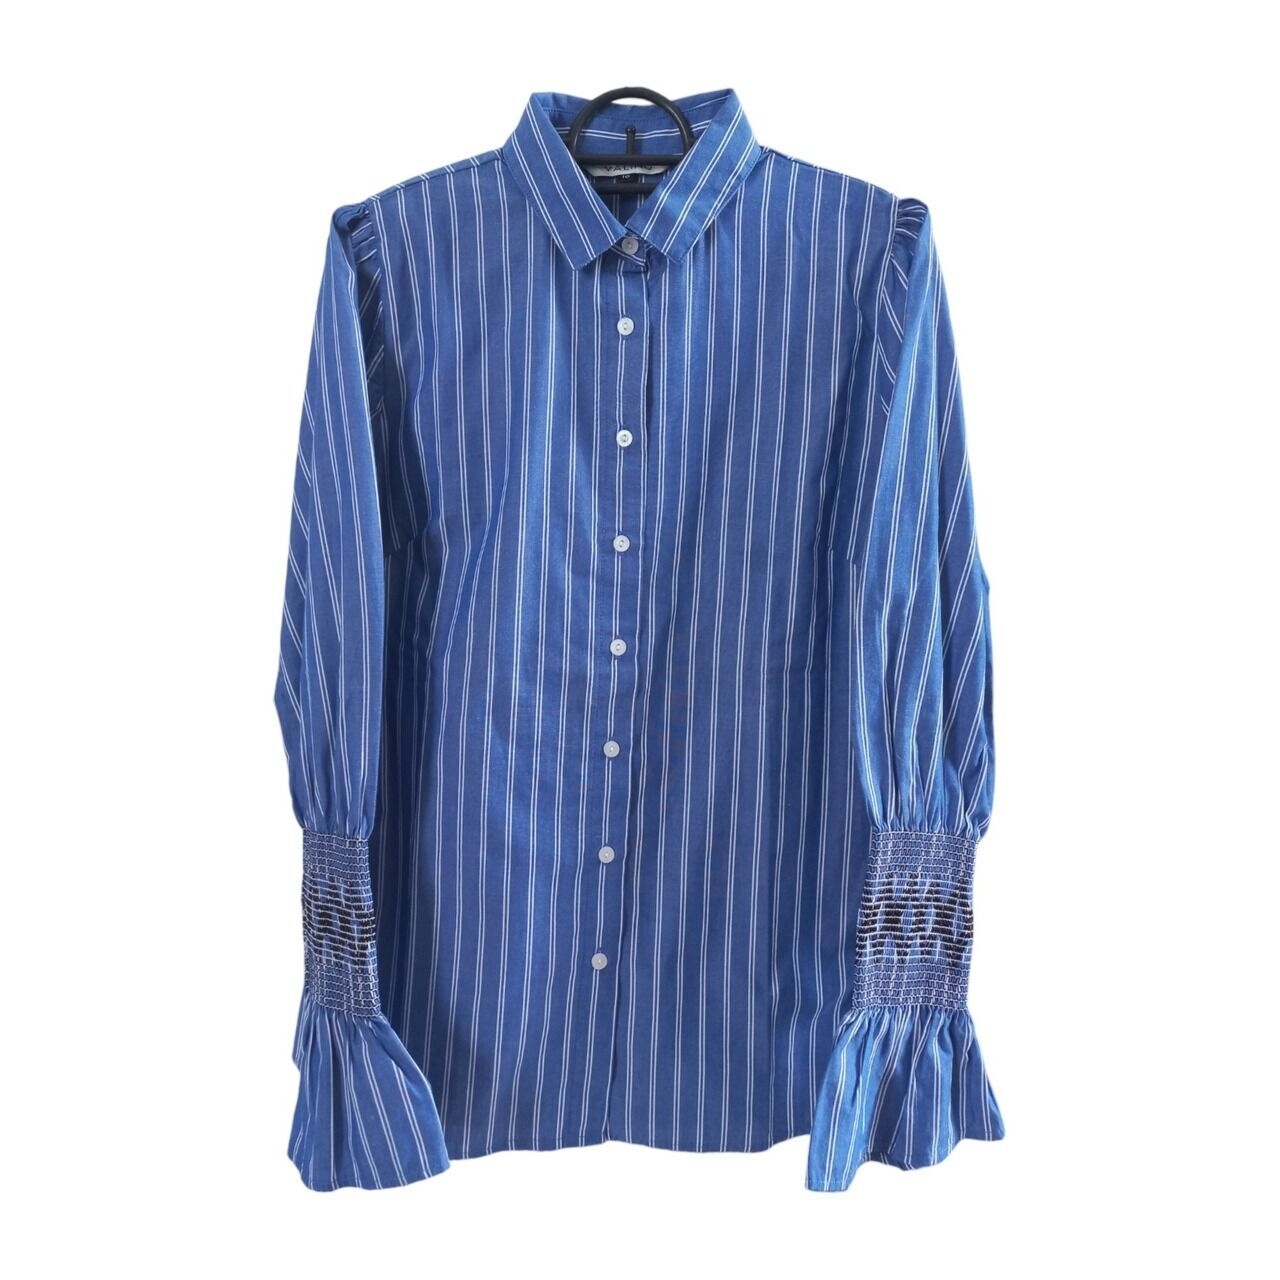 Valino Blue Stripes Shirt